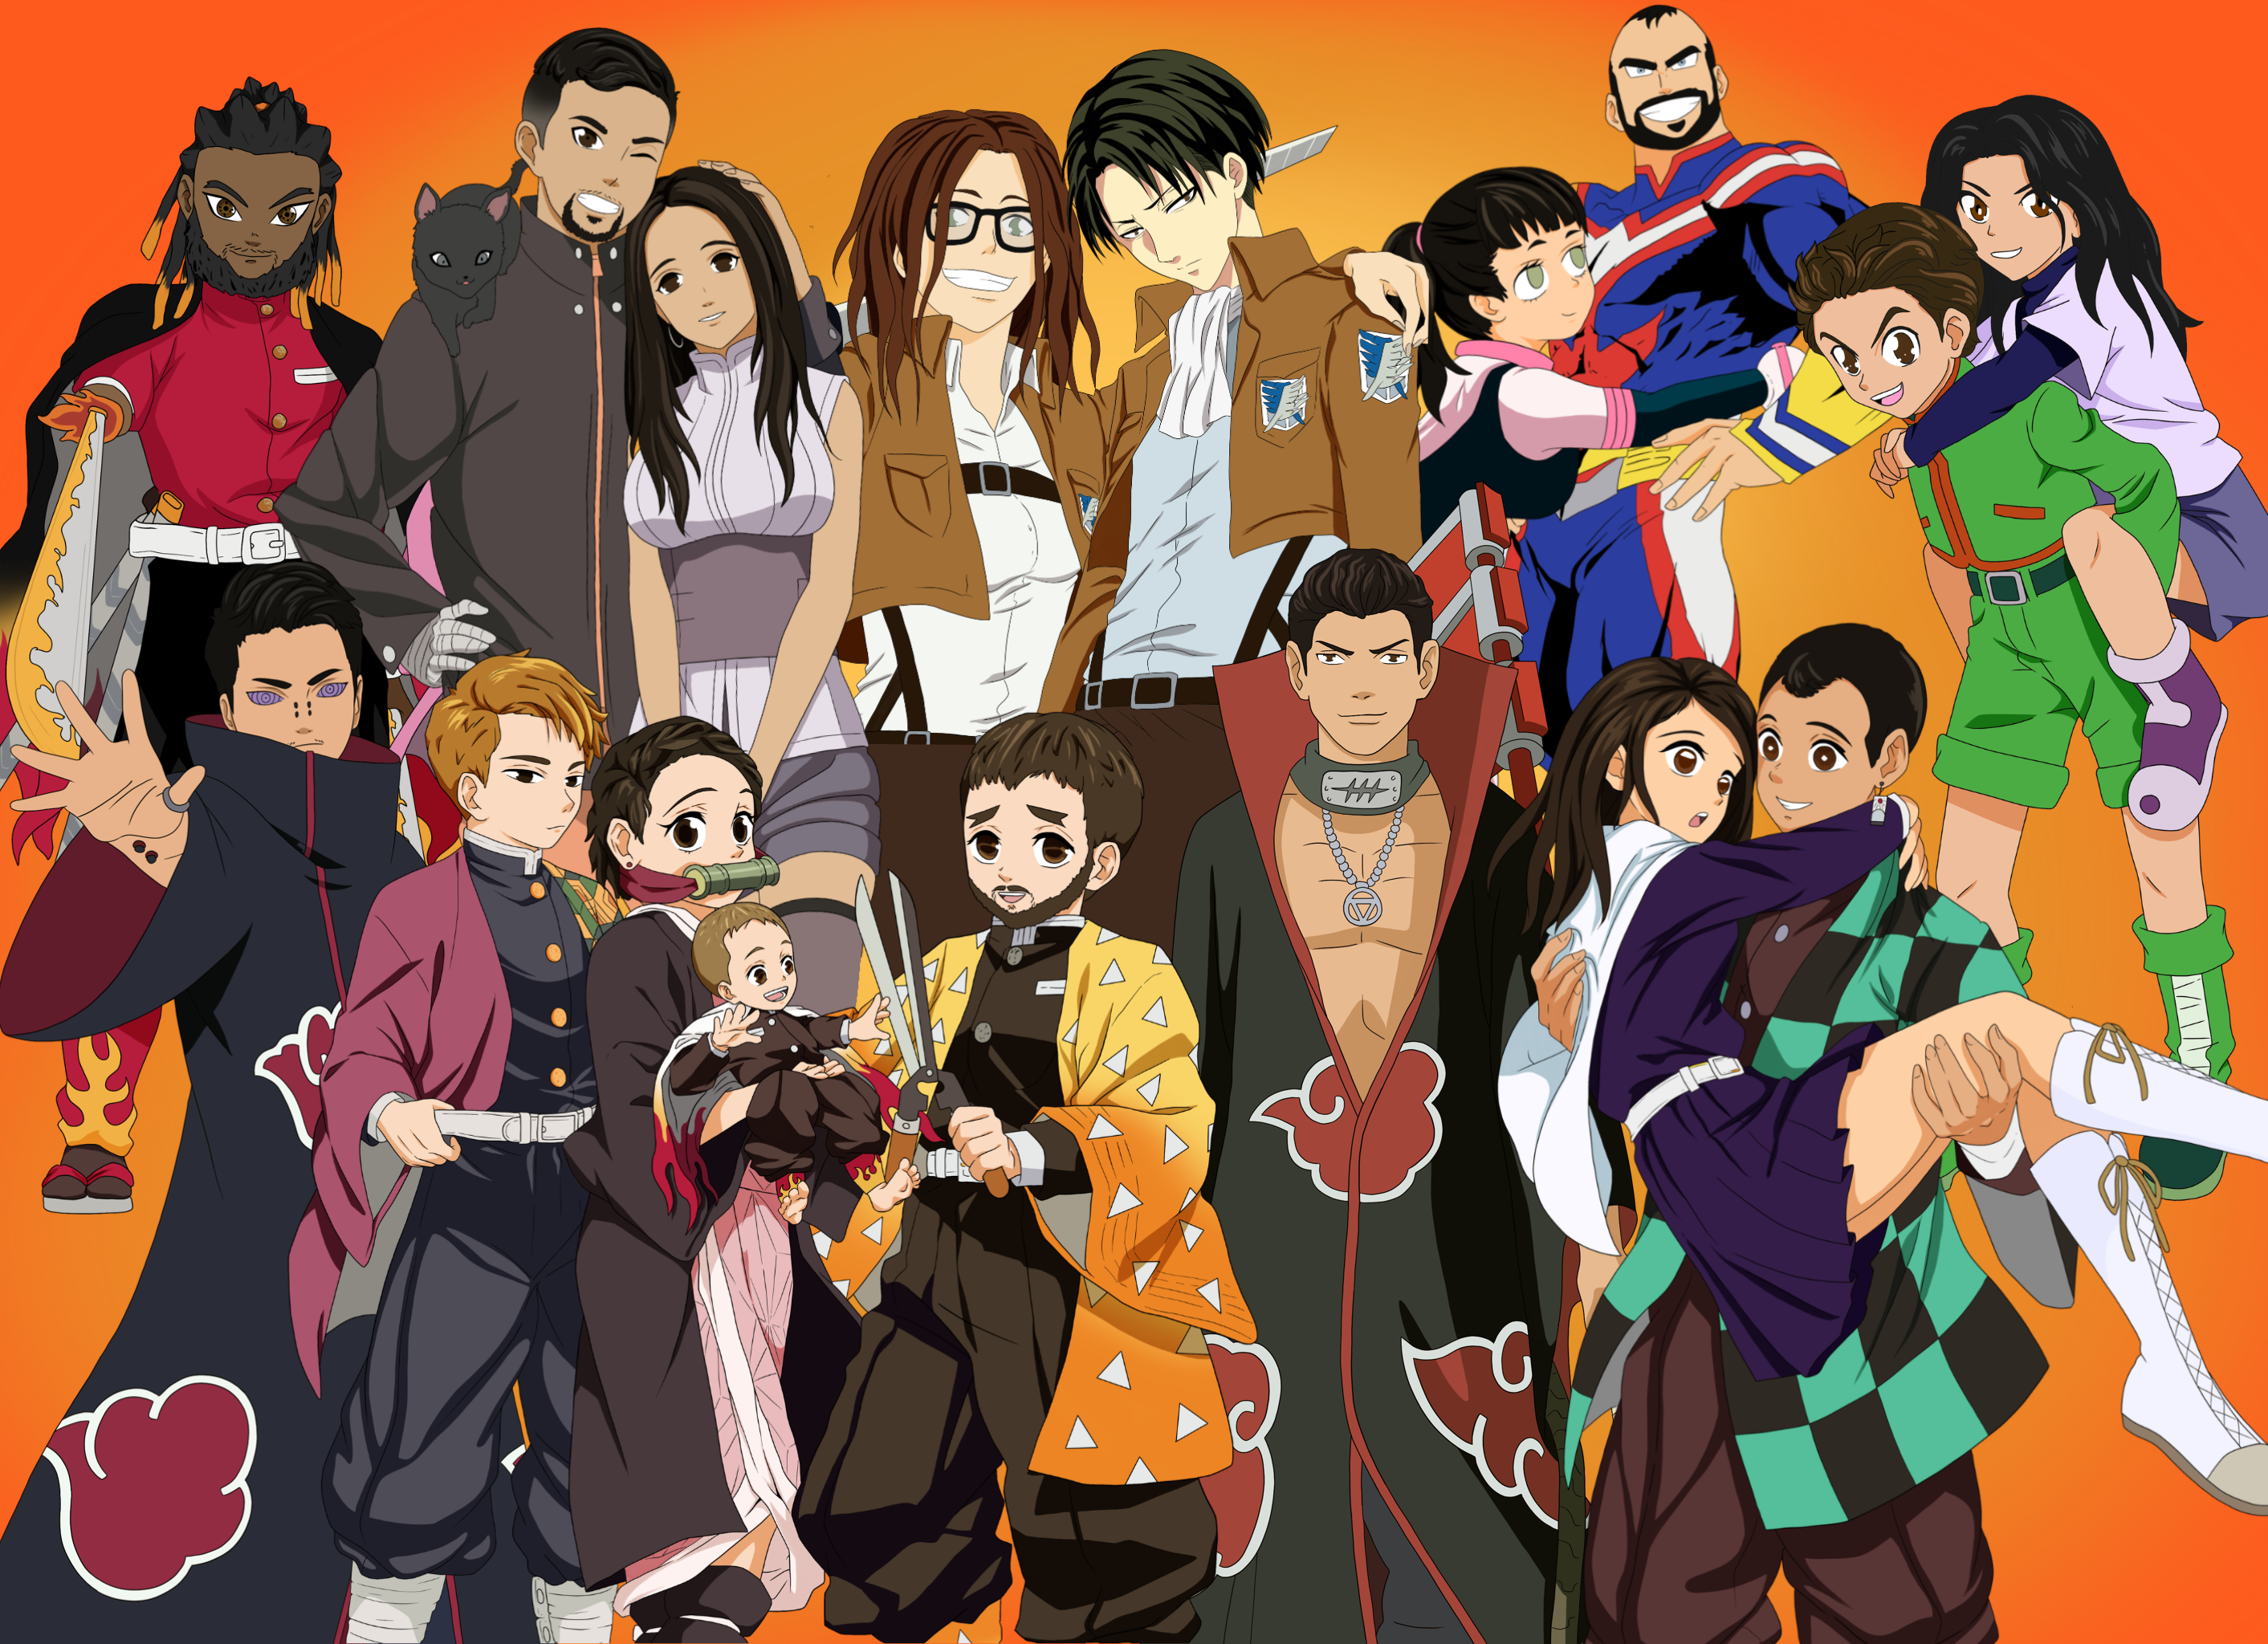 24 Best Anime Artist for Hire Online  Fiverr